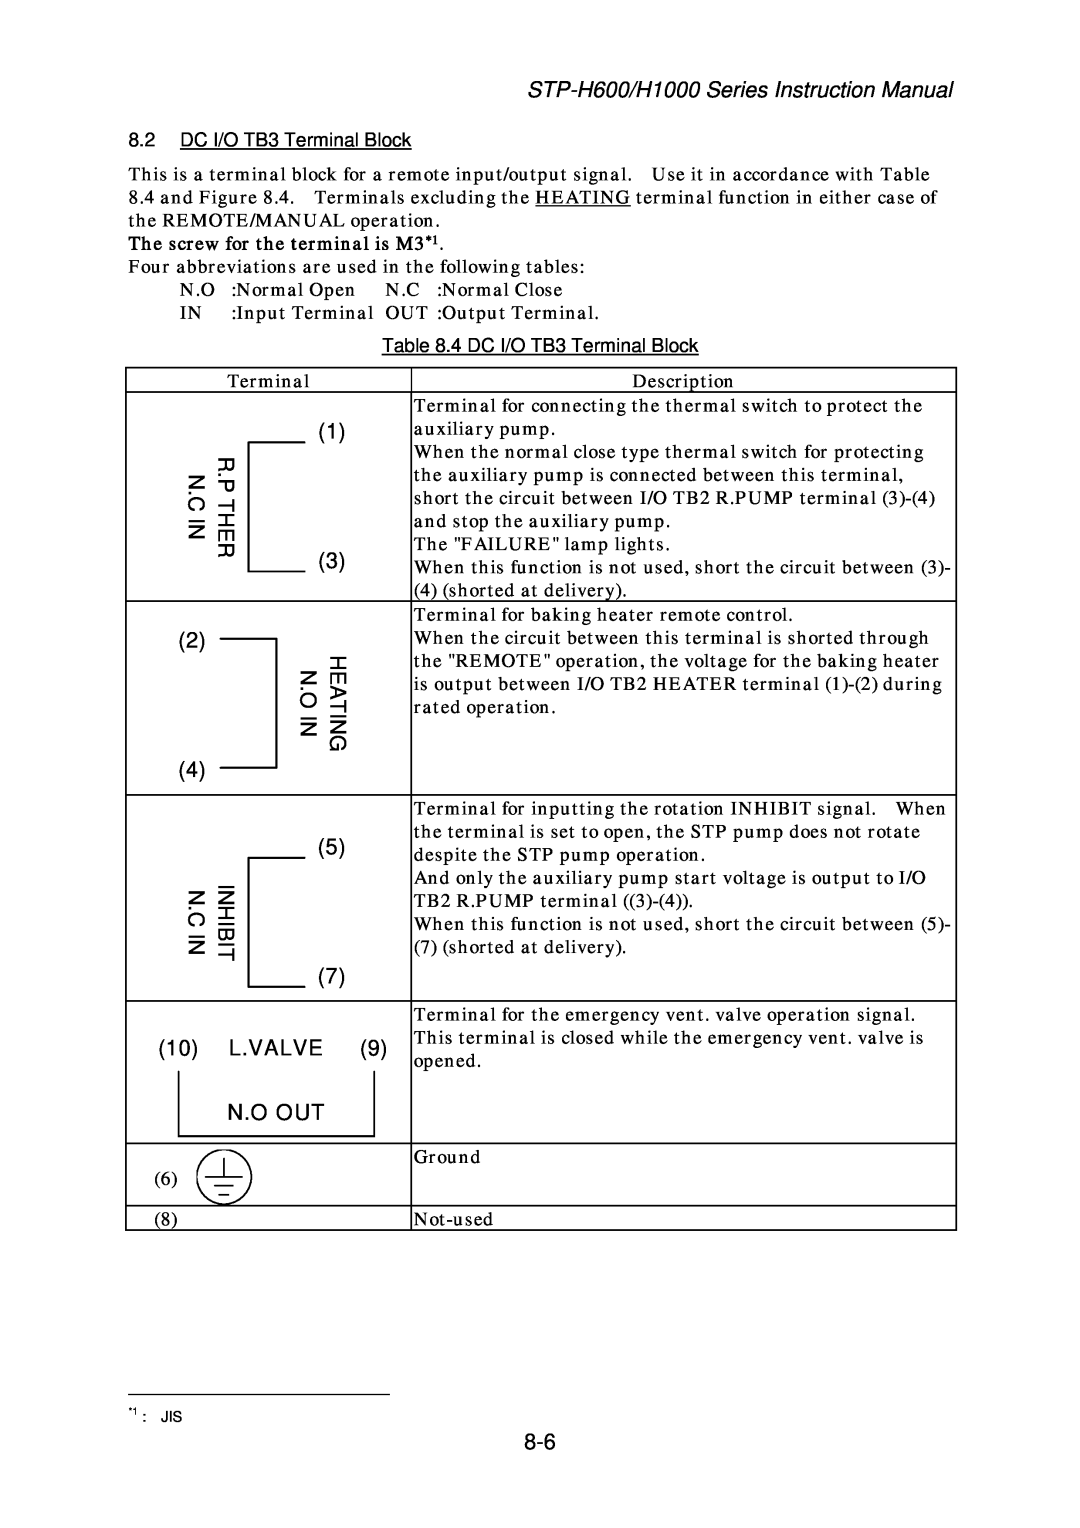 Seiko Instruments MT-17E-003-D instruction manual L.Valve 